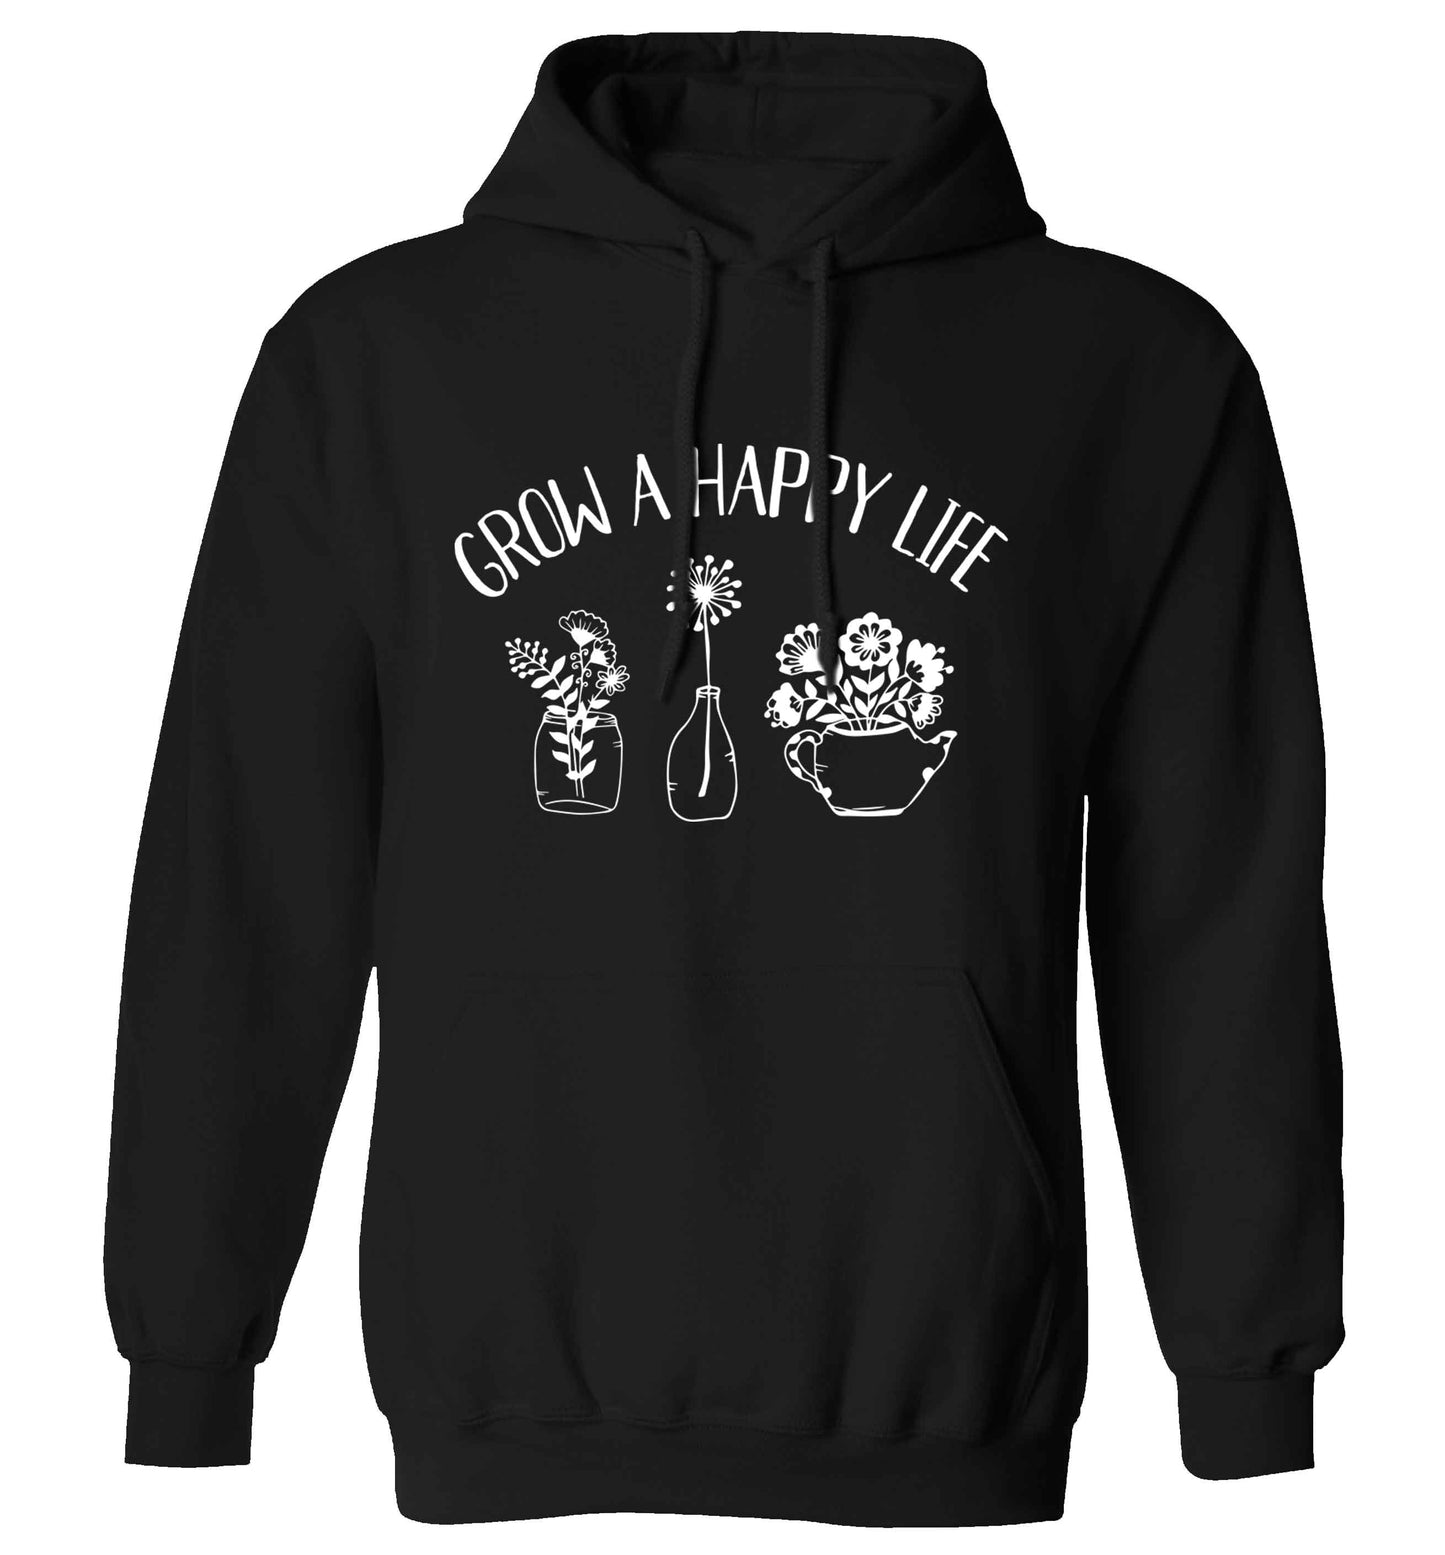 Grow a happy life adults unisex black hoodie 2XL